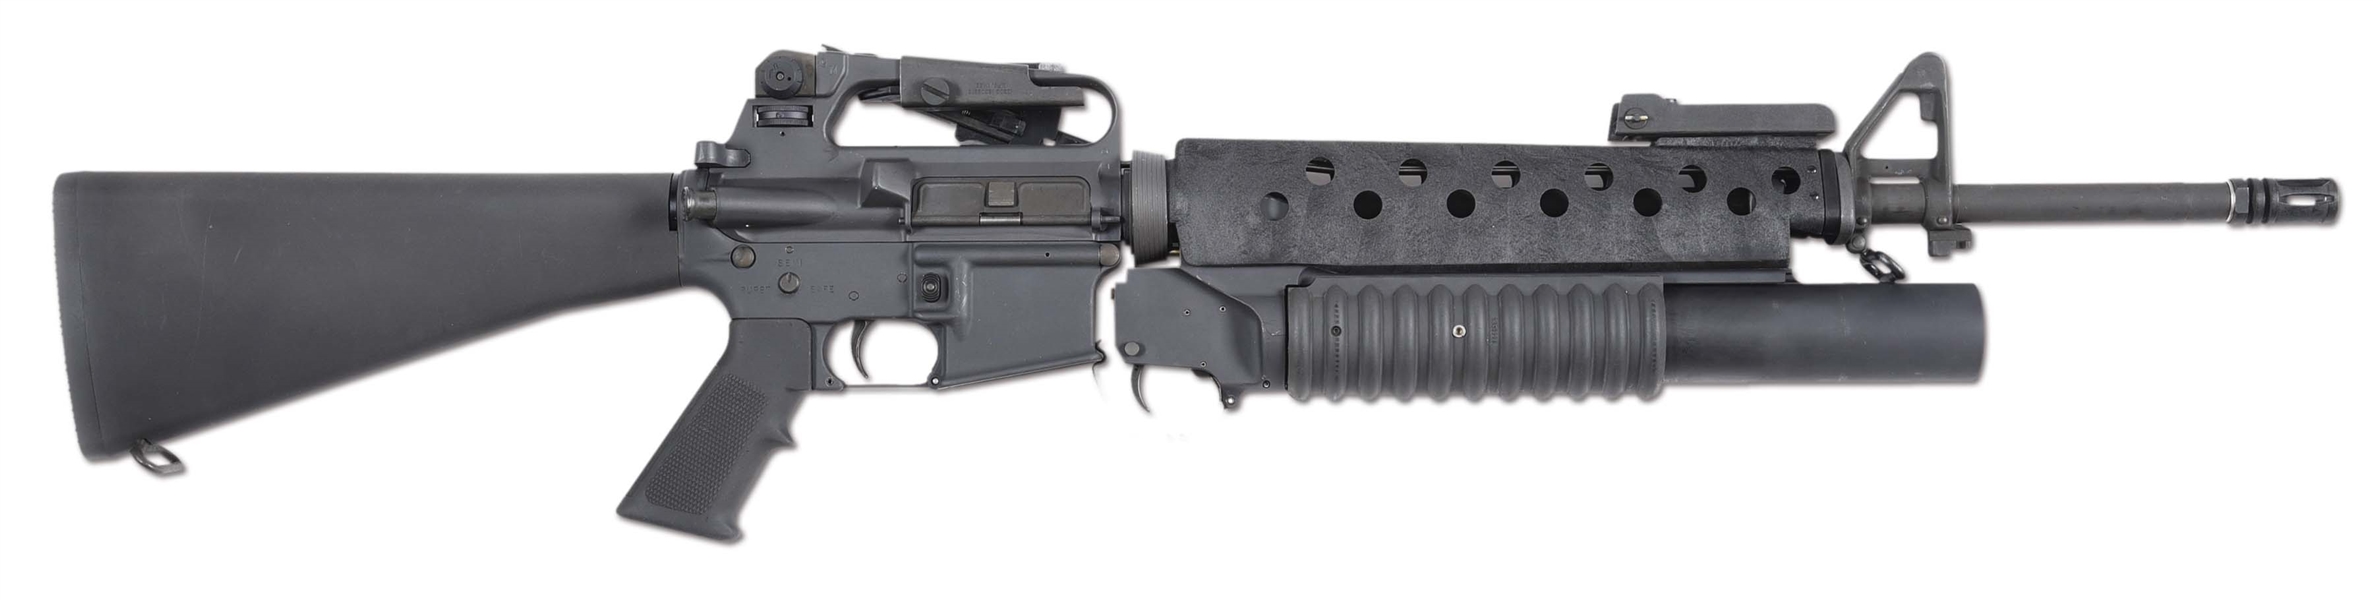 (N) COLT M16A2 MACHINE GUN WITH COLT M203 40MM GRENADE LAUNCHER.